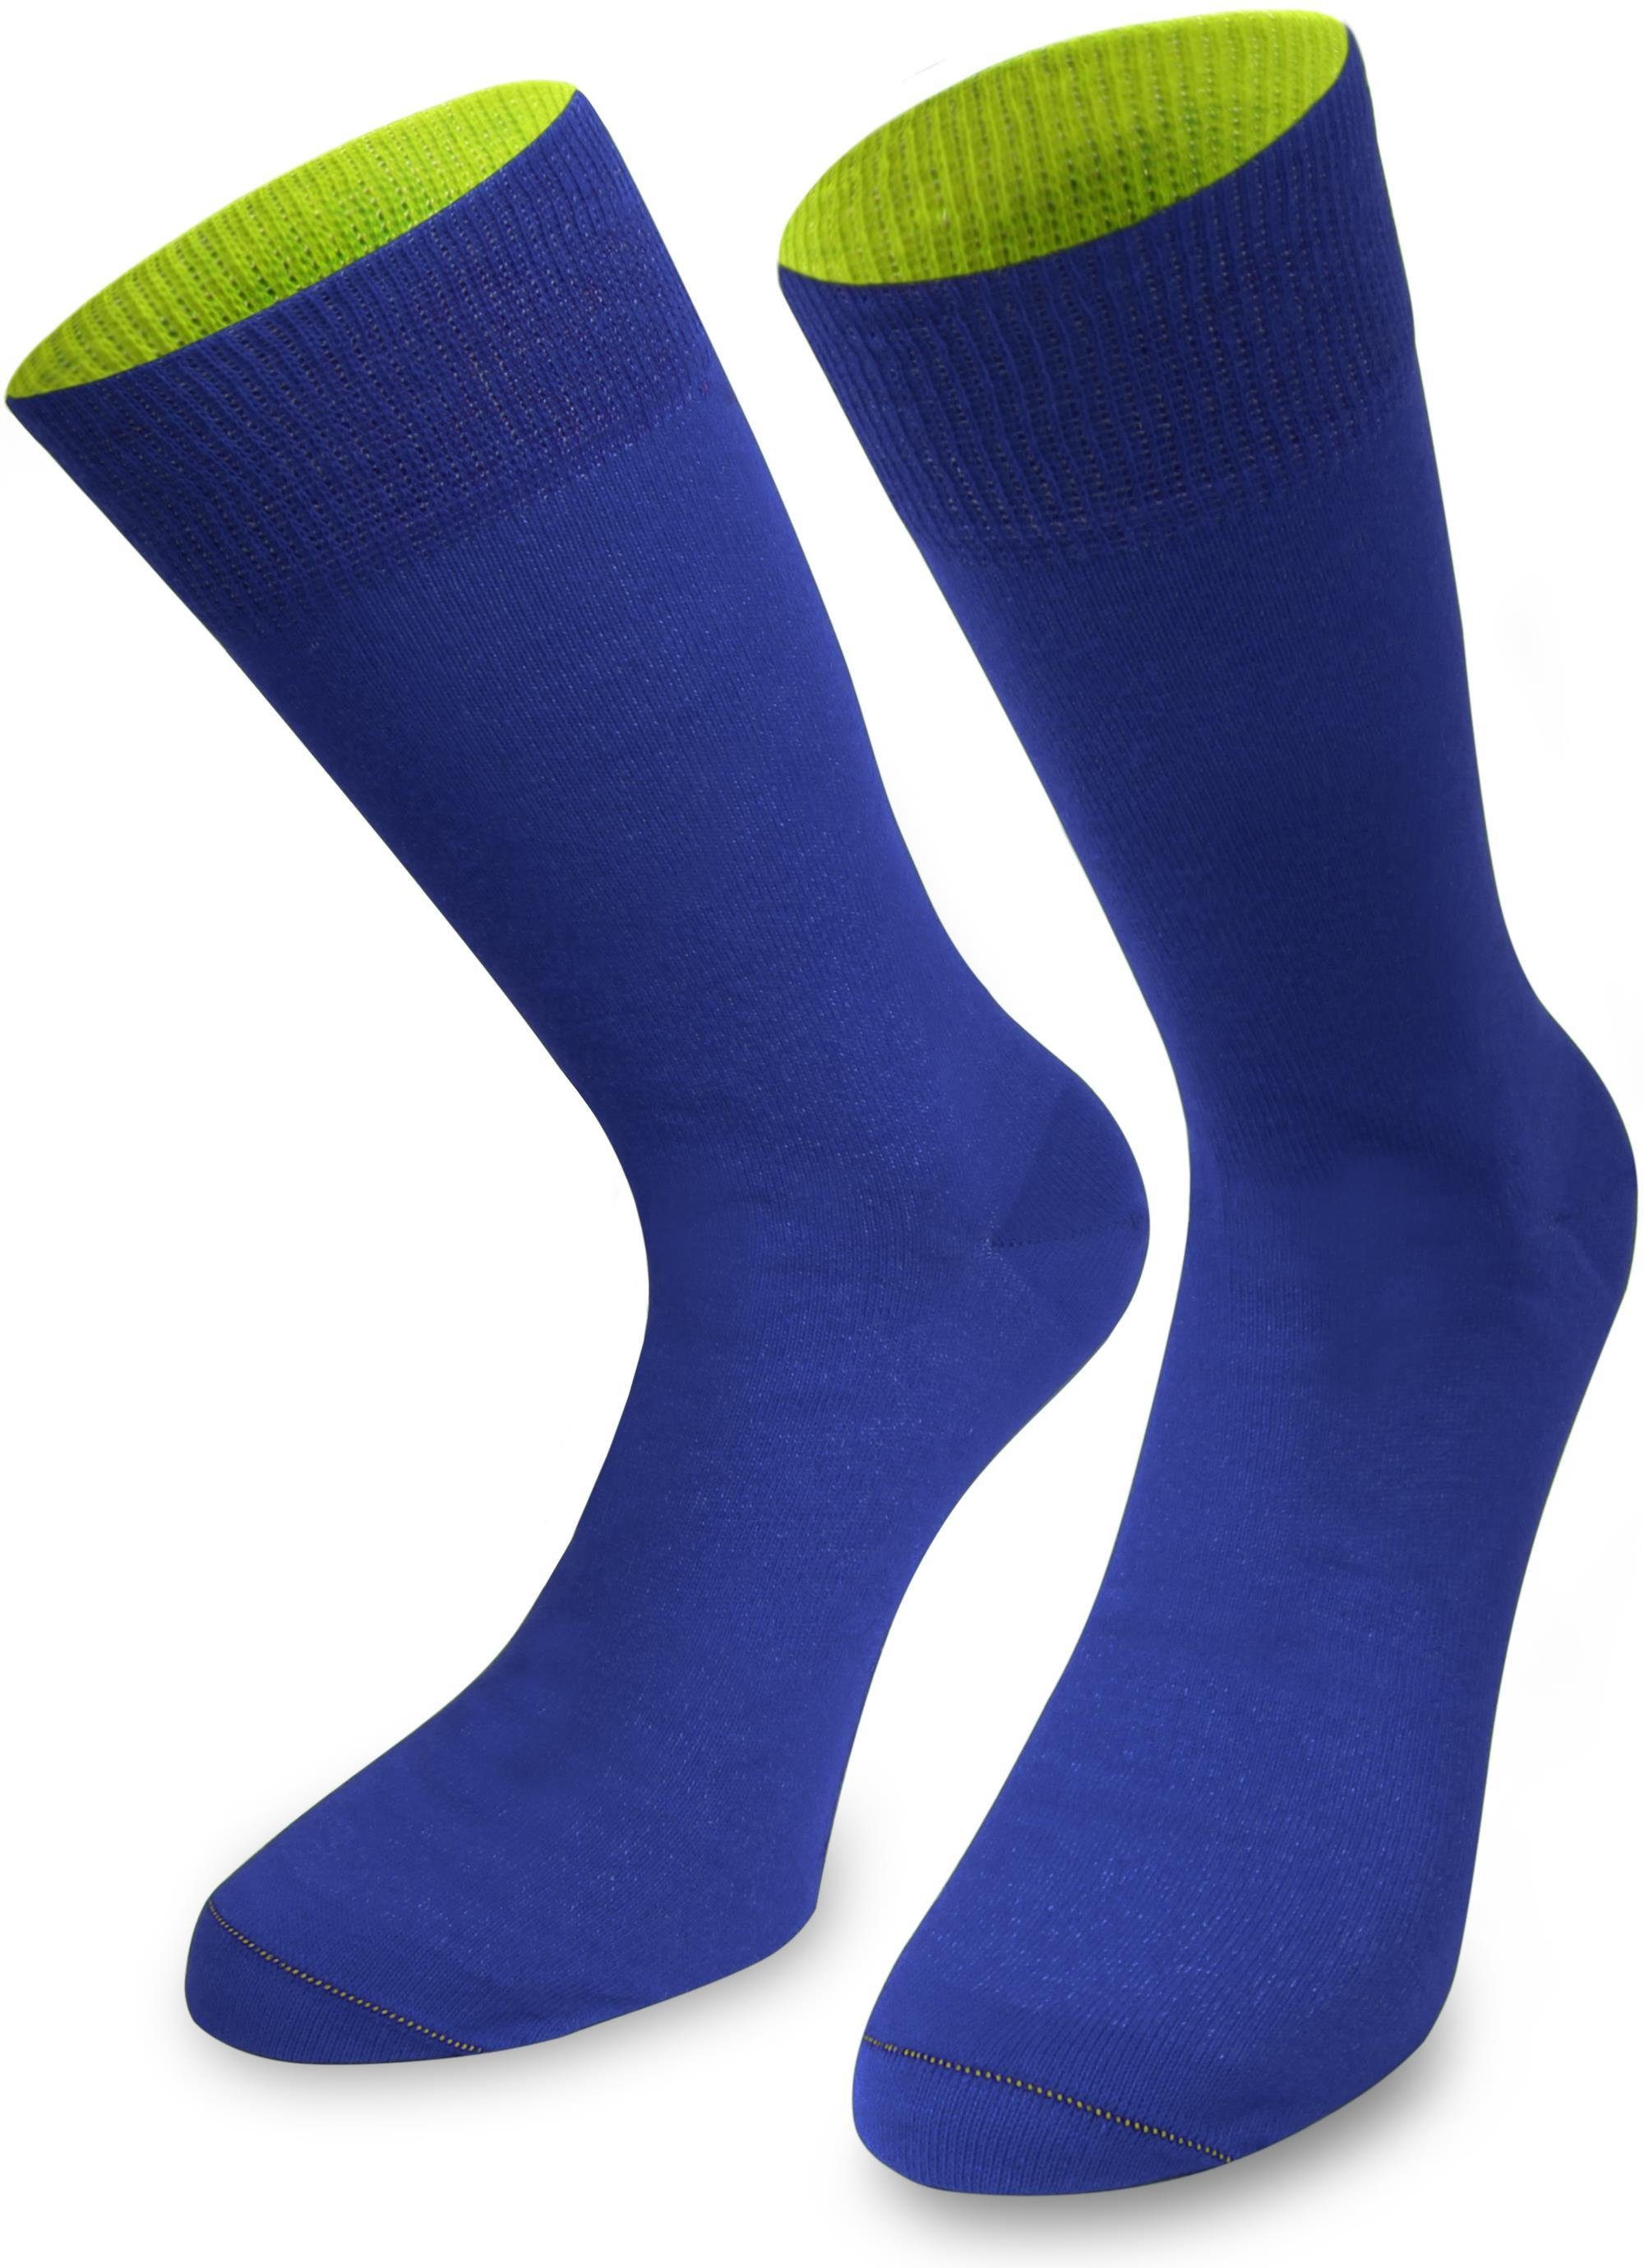 Wäsche/Bademode Socken normani Basicsocken 1 Paar Socken Bi-Color (1 Paar) farbig abgesetzter Bund